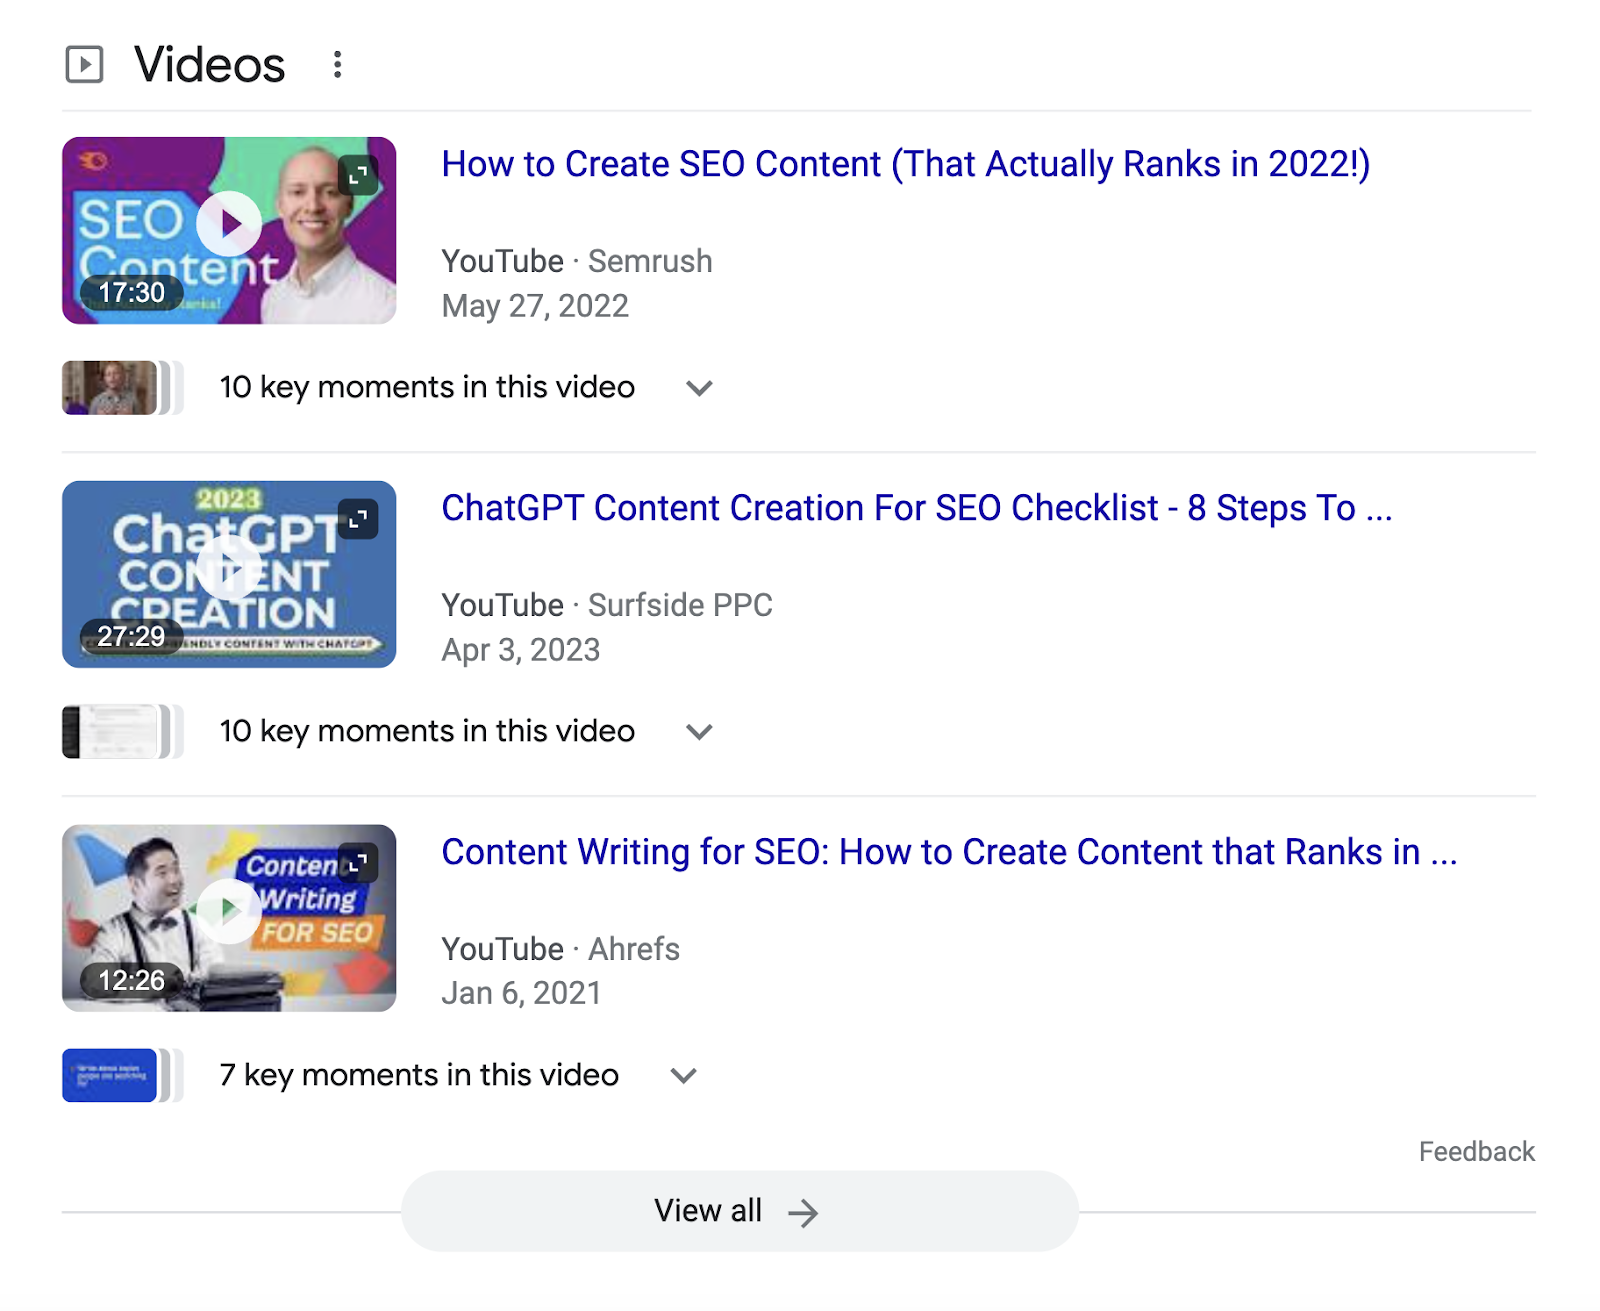 Semrush’s YouTube video ranks for "SEO content"